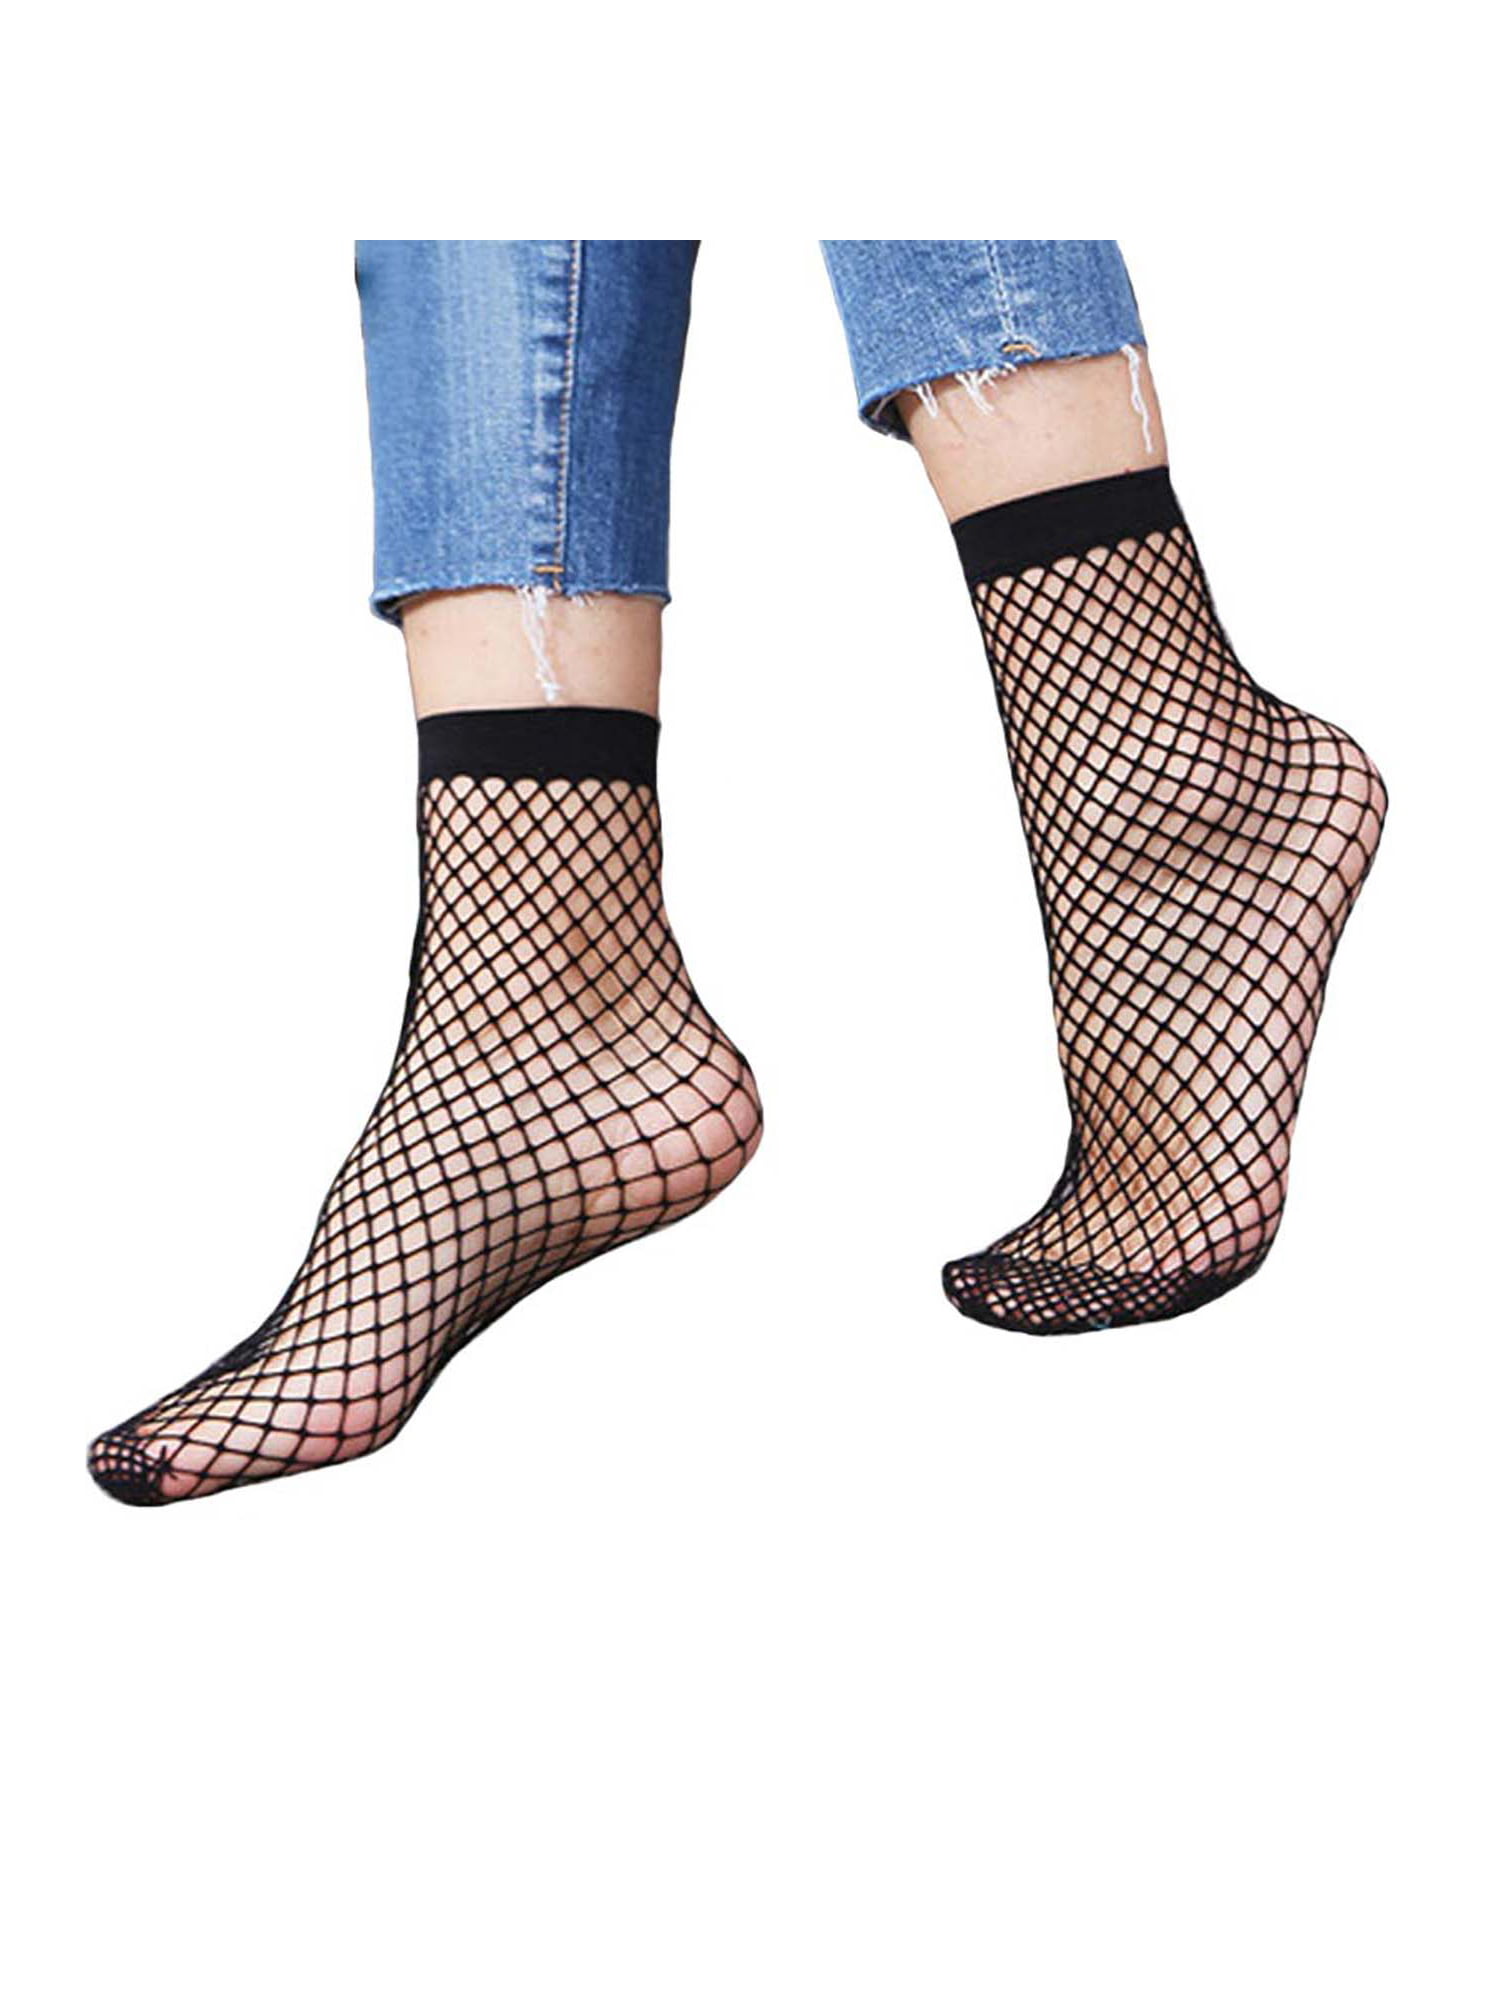 Black Girls Womens Sheer Lace Fishnet Ankle Socks one size